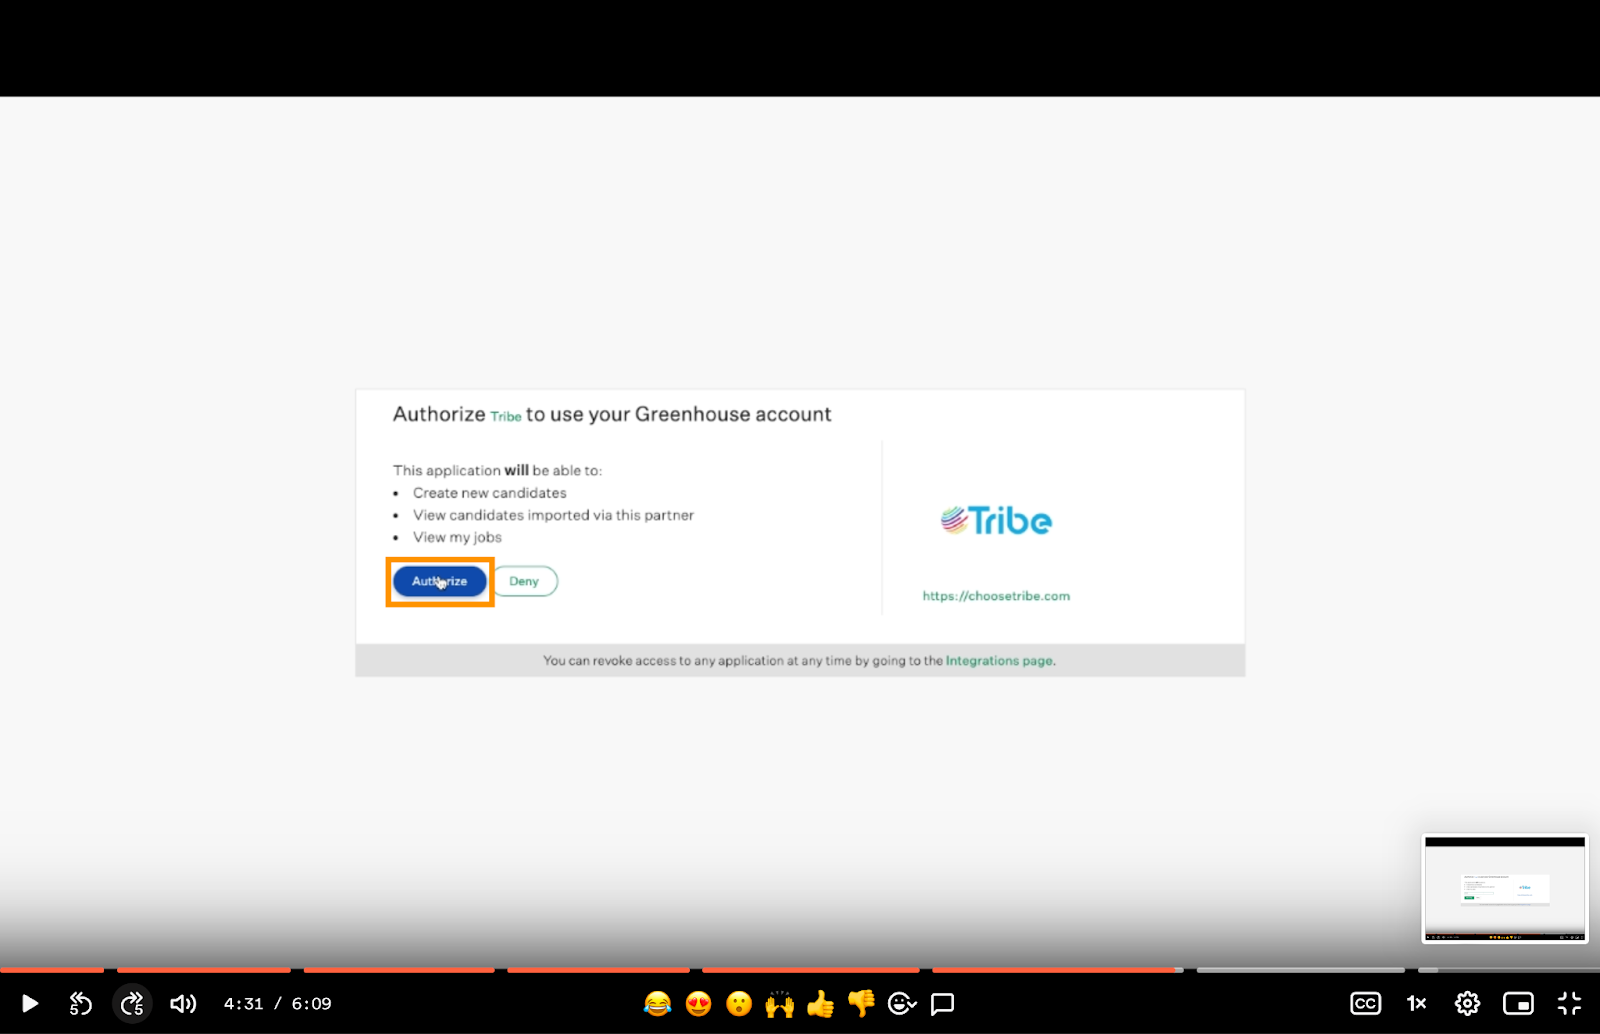 Tribe platform shows Authorize button